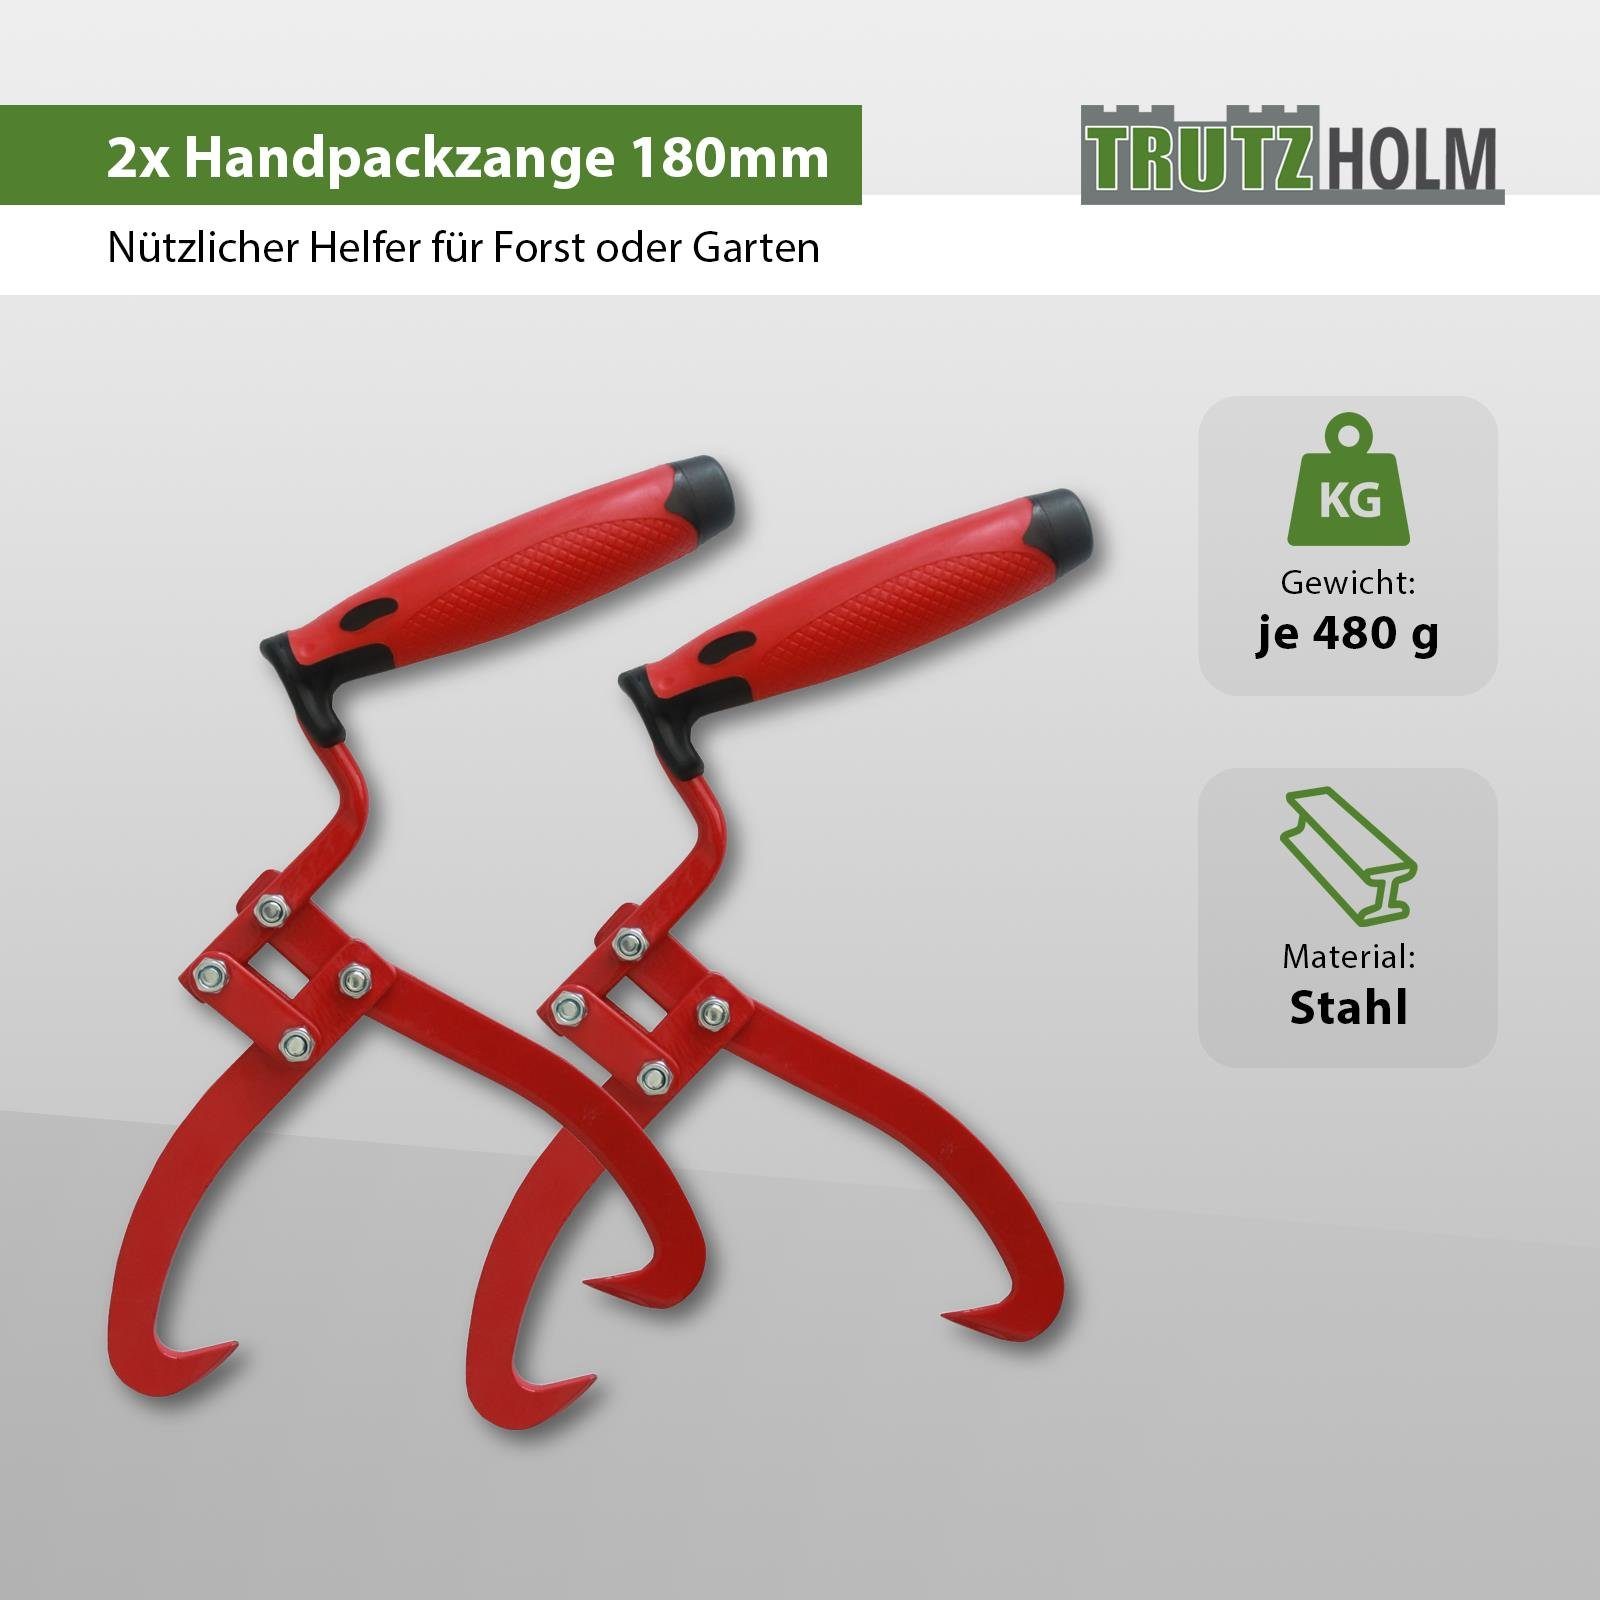 TRUTZHOLM Handpackzange 2x Handpackzange Packzange Handhebehaken Sappie  Holzgreifer Forstzange, Öffnungsweite max. 18 cm, Set, 2-tlg.]